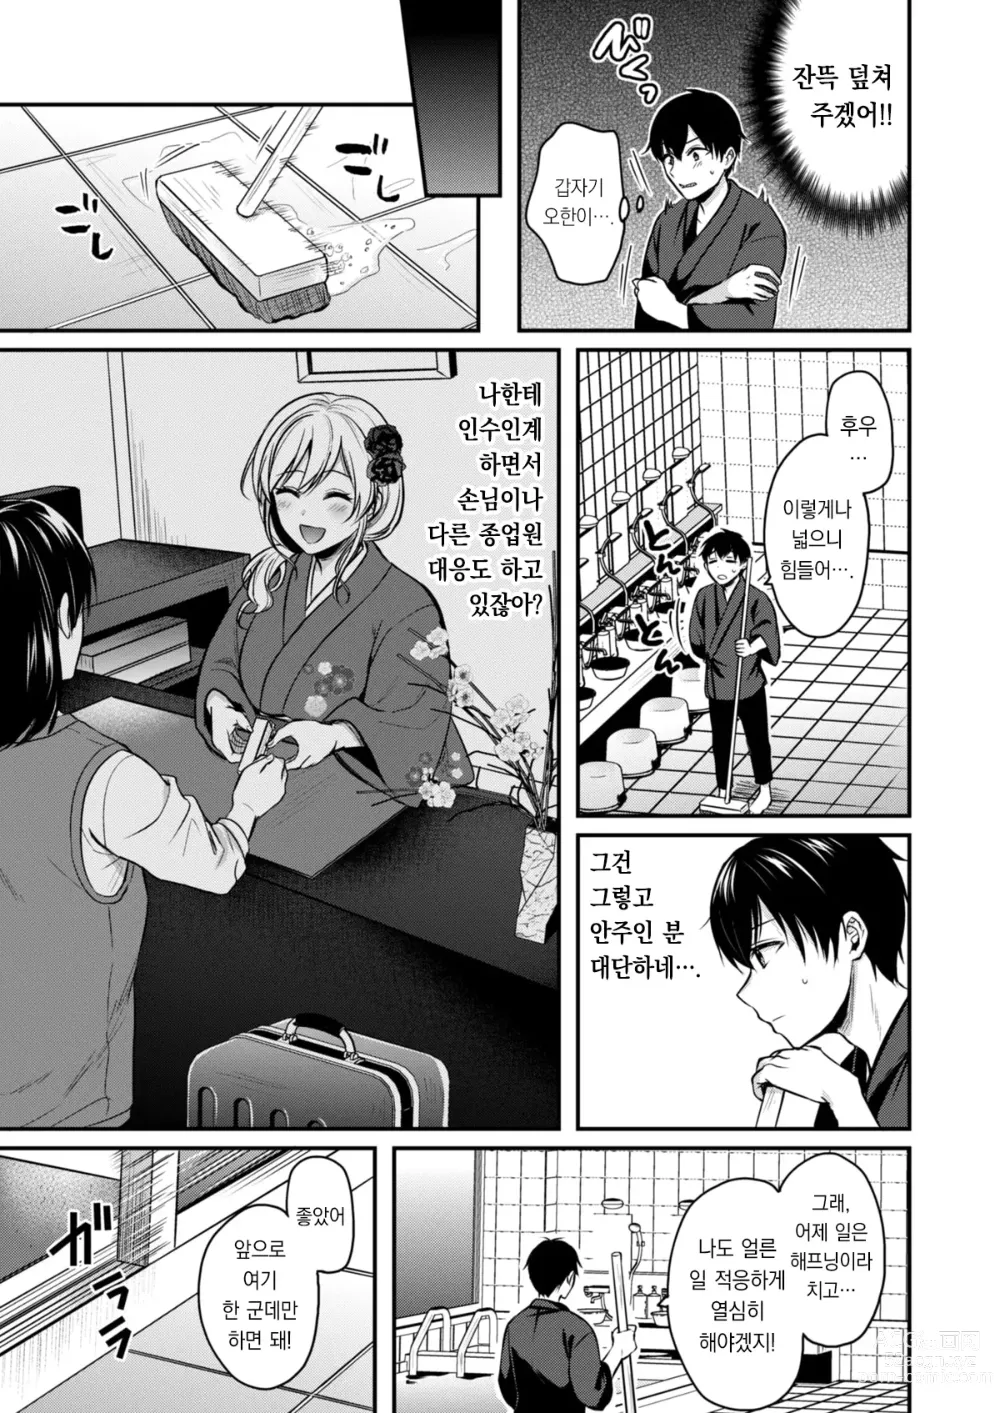 Page 5 of manga 내 여름방학은 젊은 갸루 안주인과 알바 생활?! 2